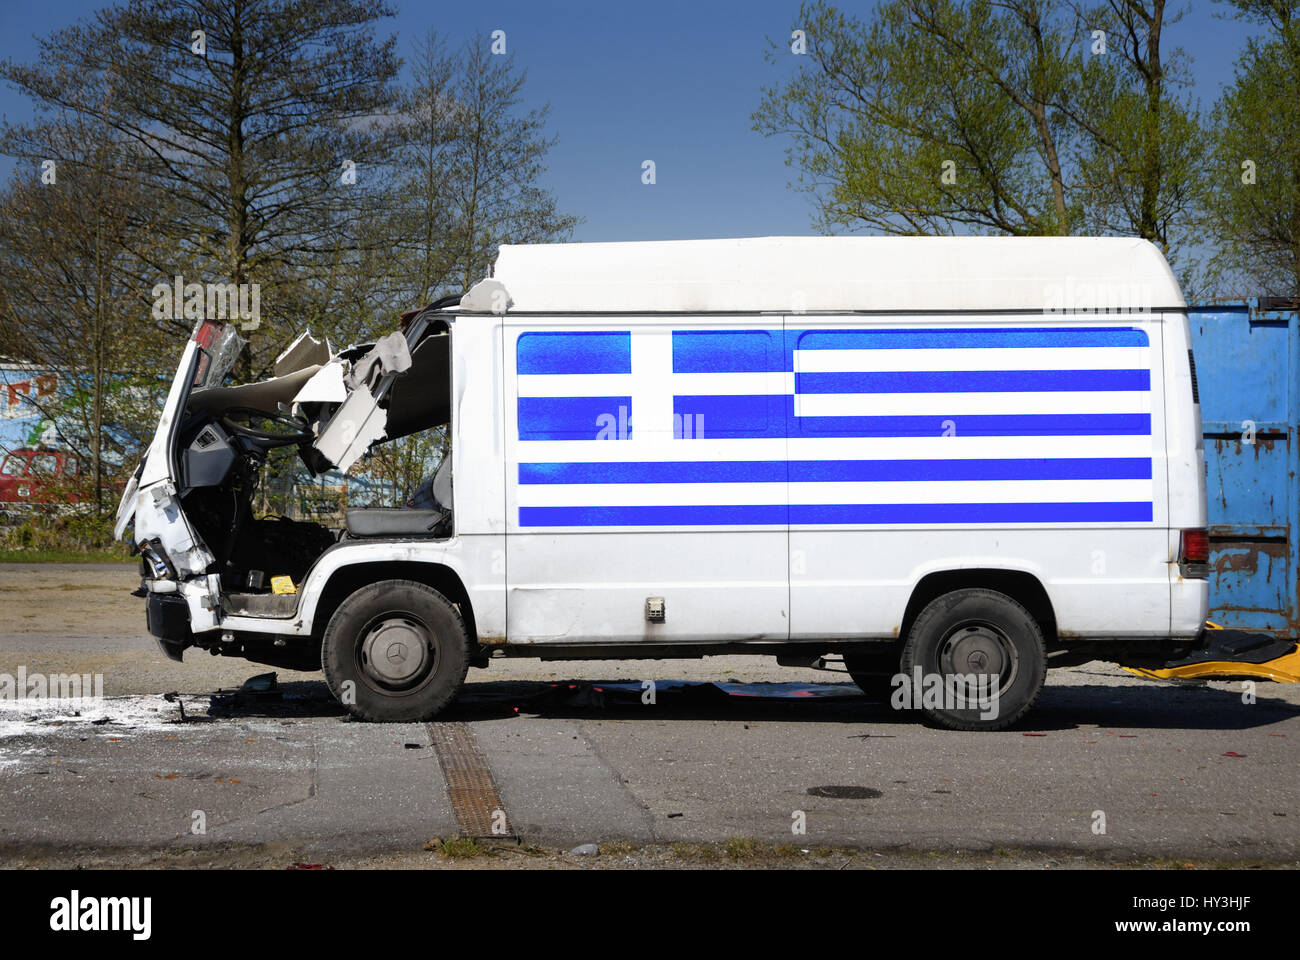 Scrap metal ropemaker transporter with Greece flag, Schrottreifer Transporter mit Griechenland-Fahne Stock Photo